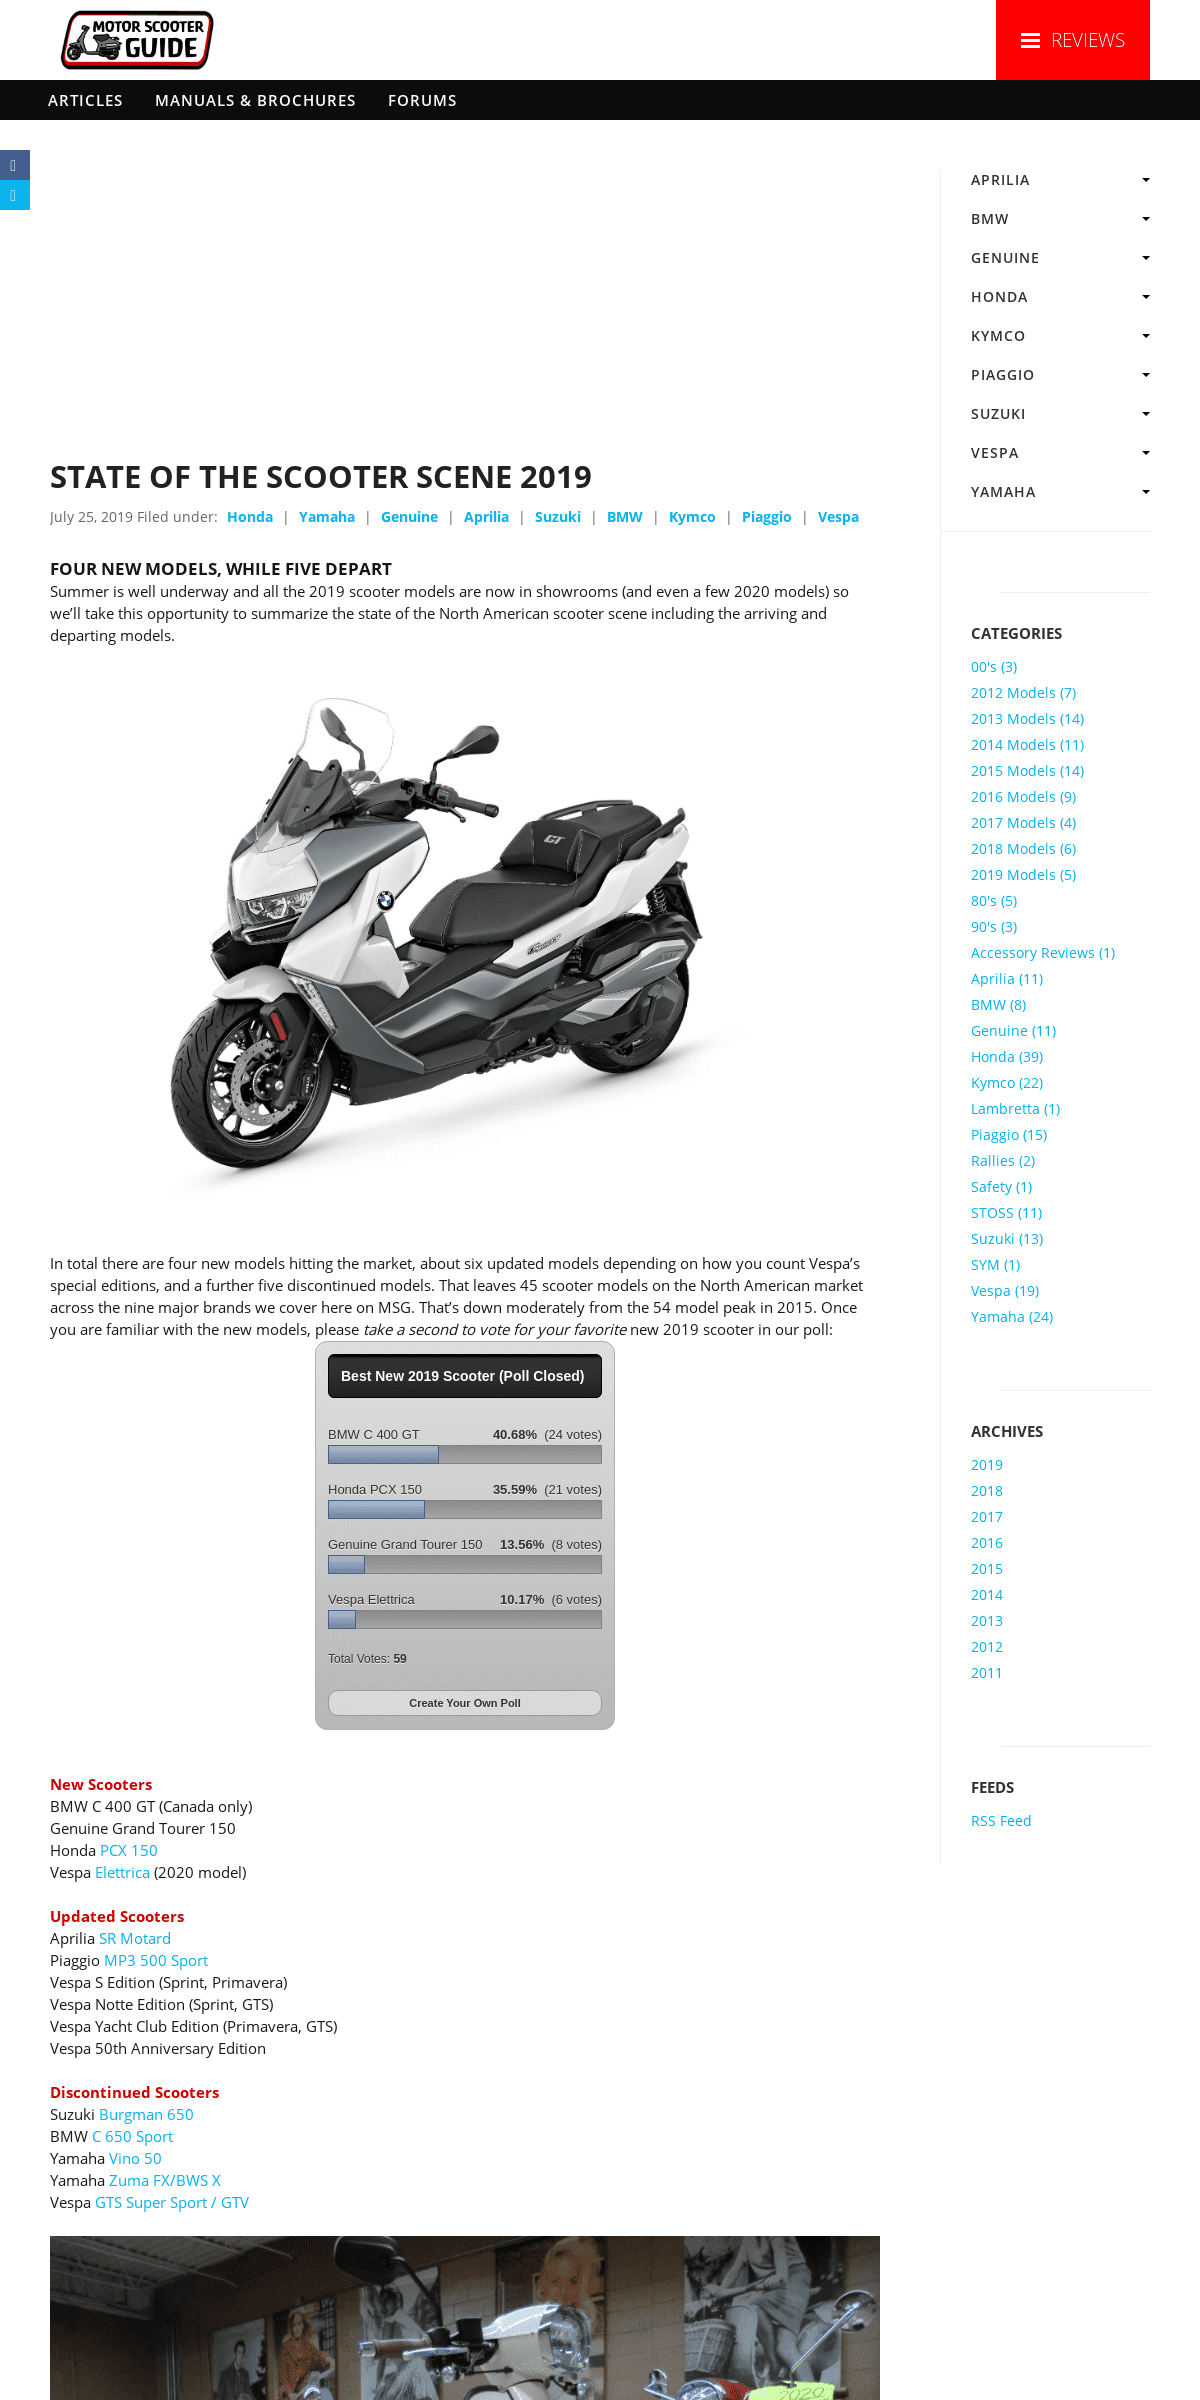 A complete backup of motorscooterguide.net